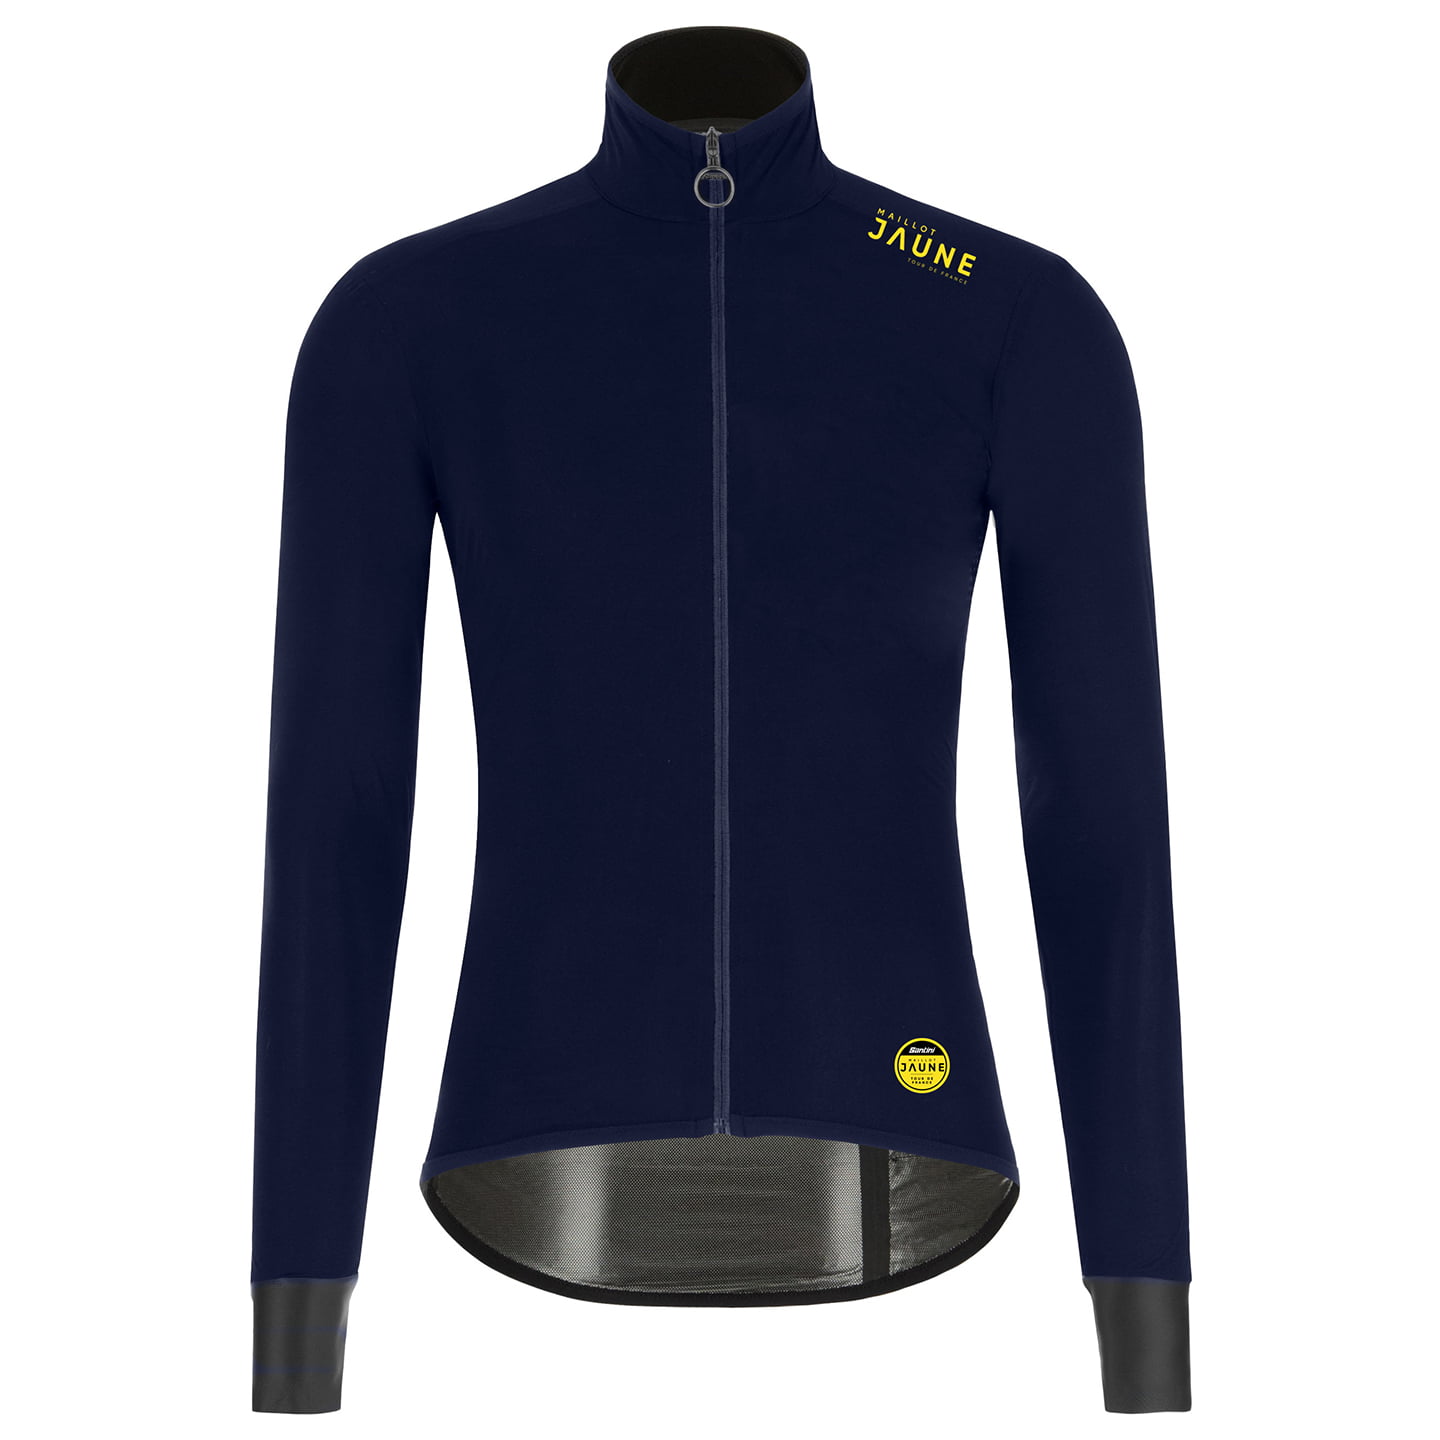 TOUR DE FRANCE Le Maillot Jaune 2023 Waterproof Jacket, for men, size L, Cycle jacket, Cycle gear